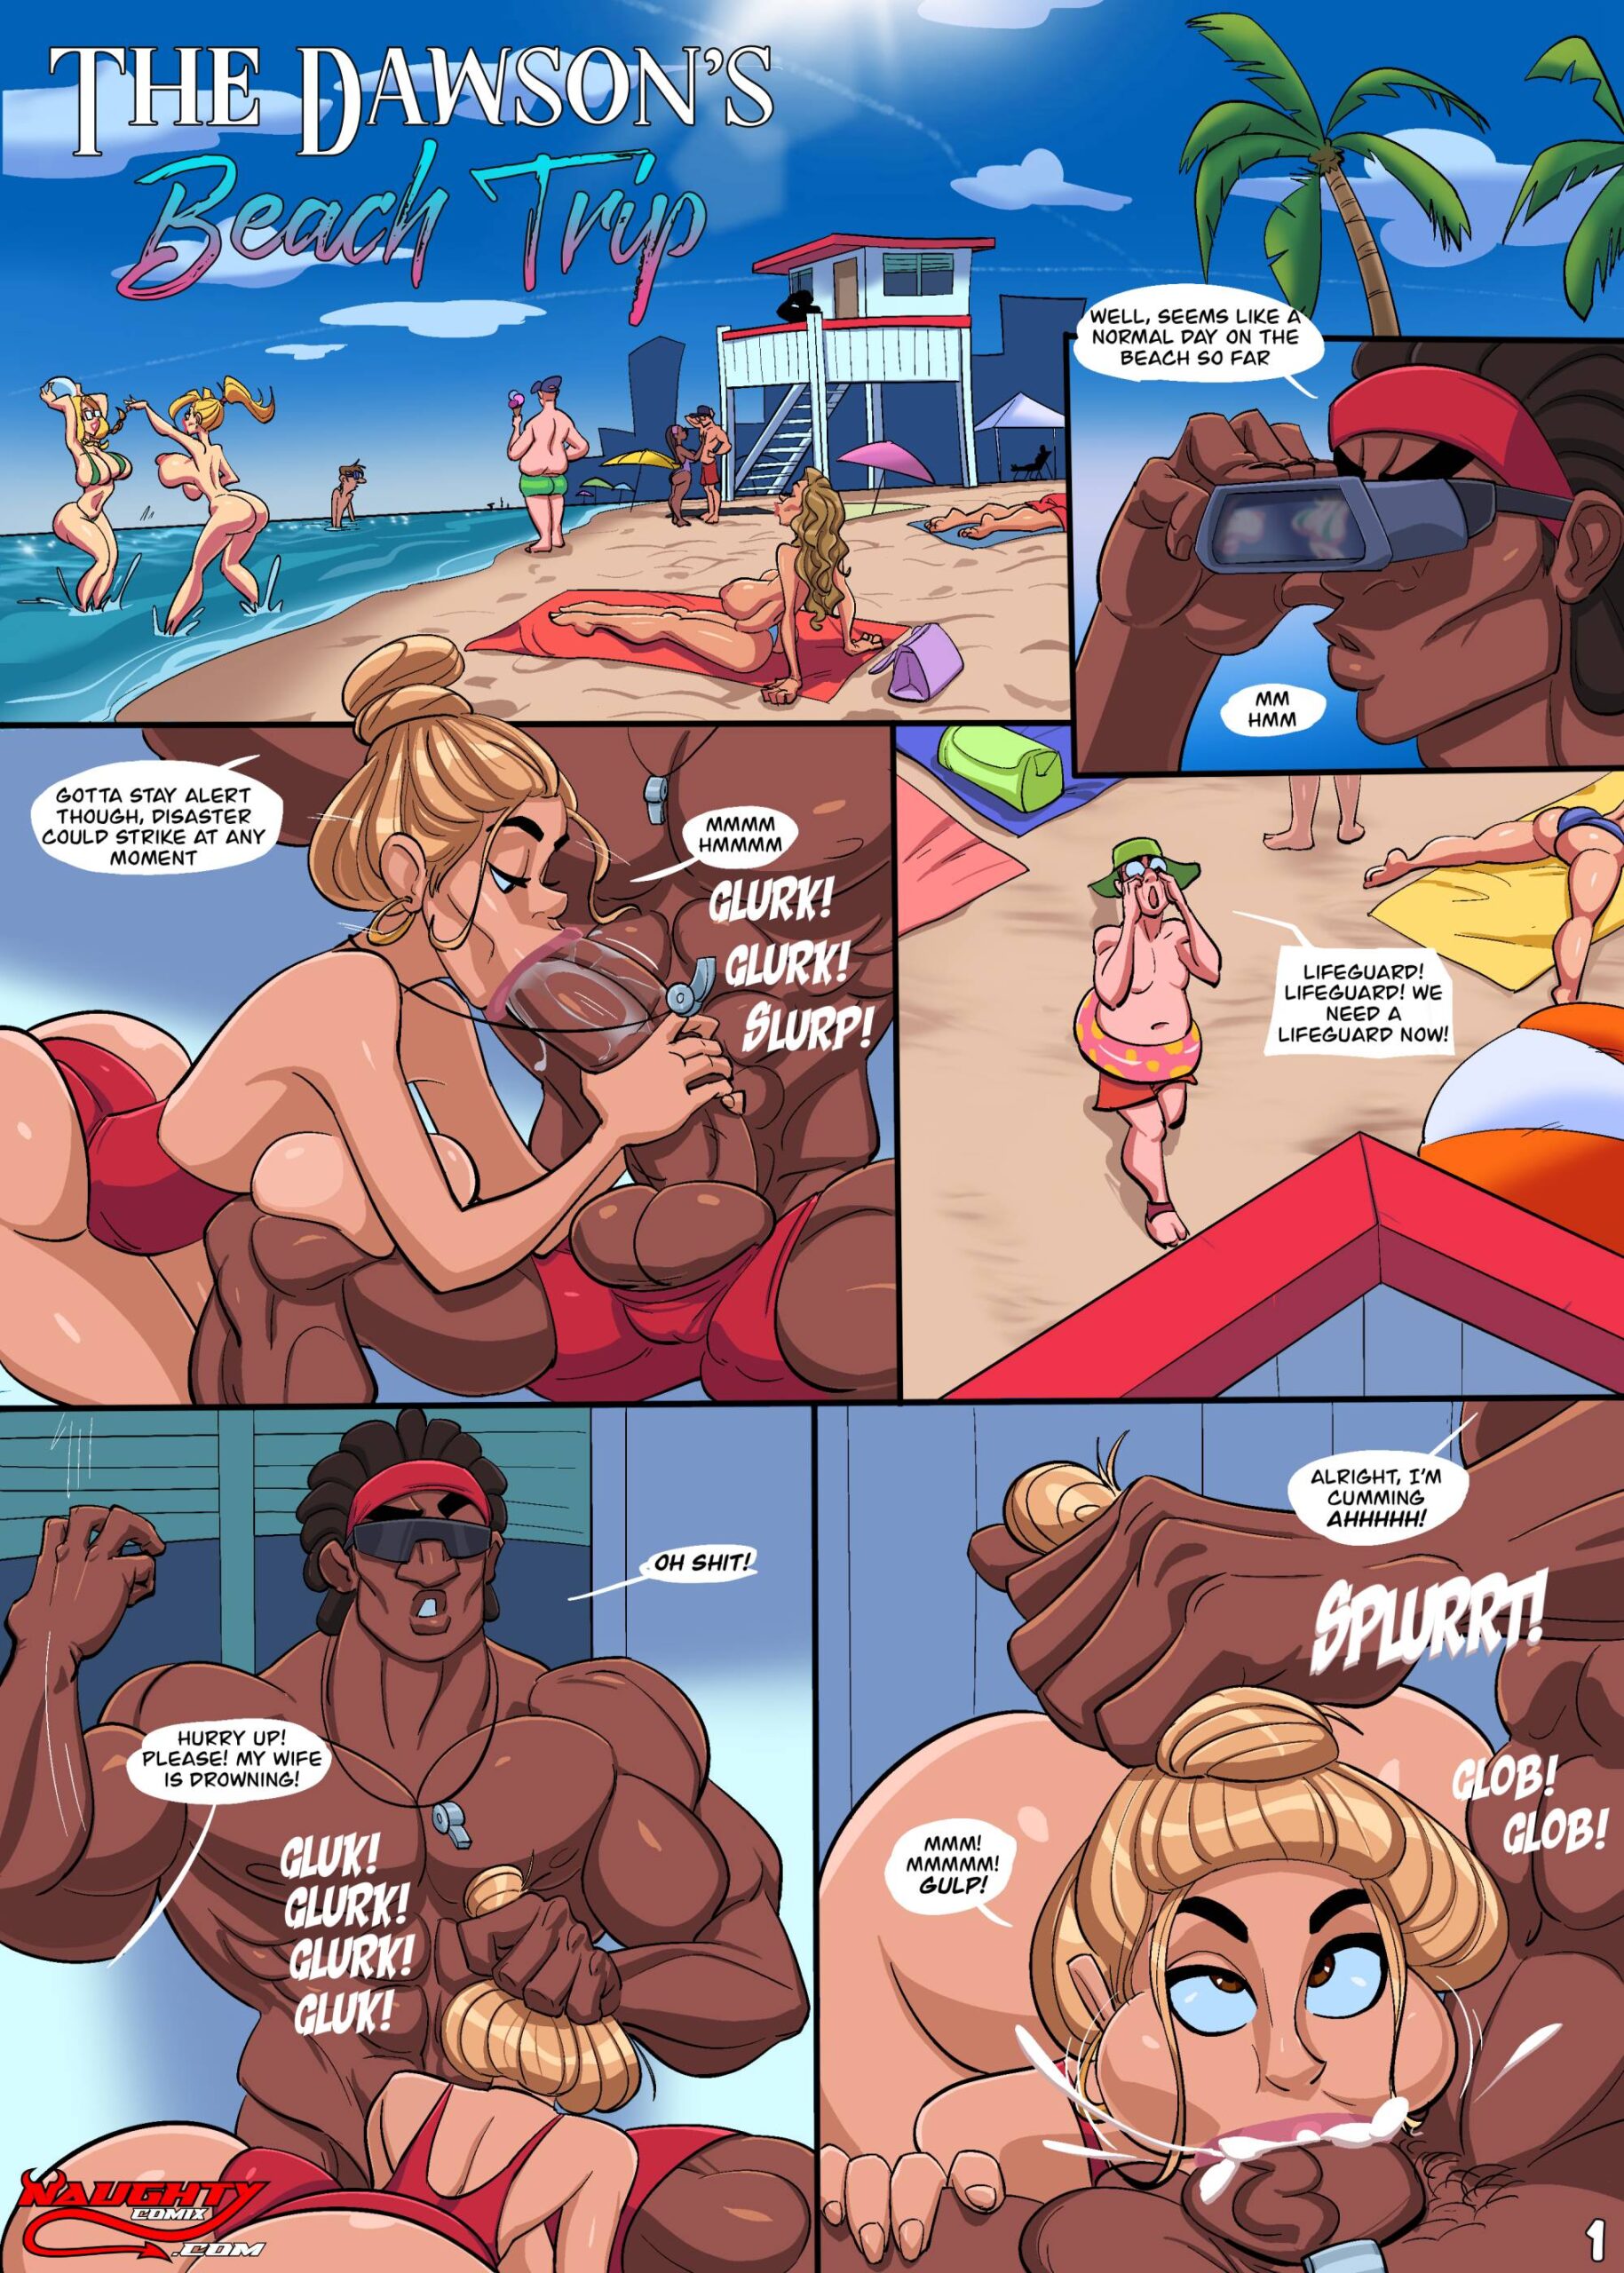 Beach porn cartoon